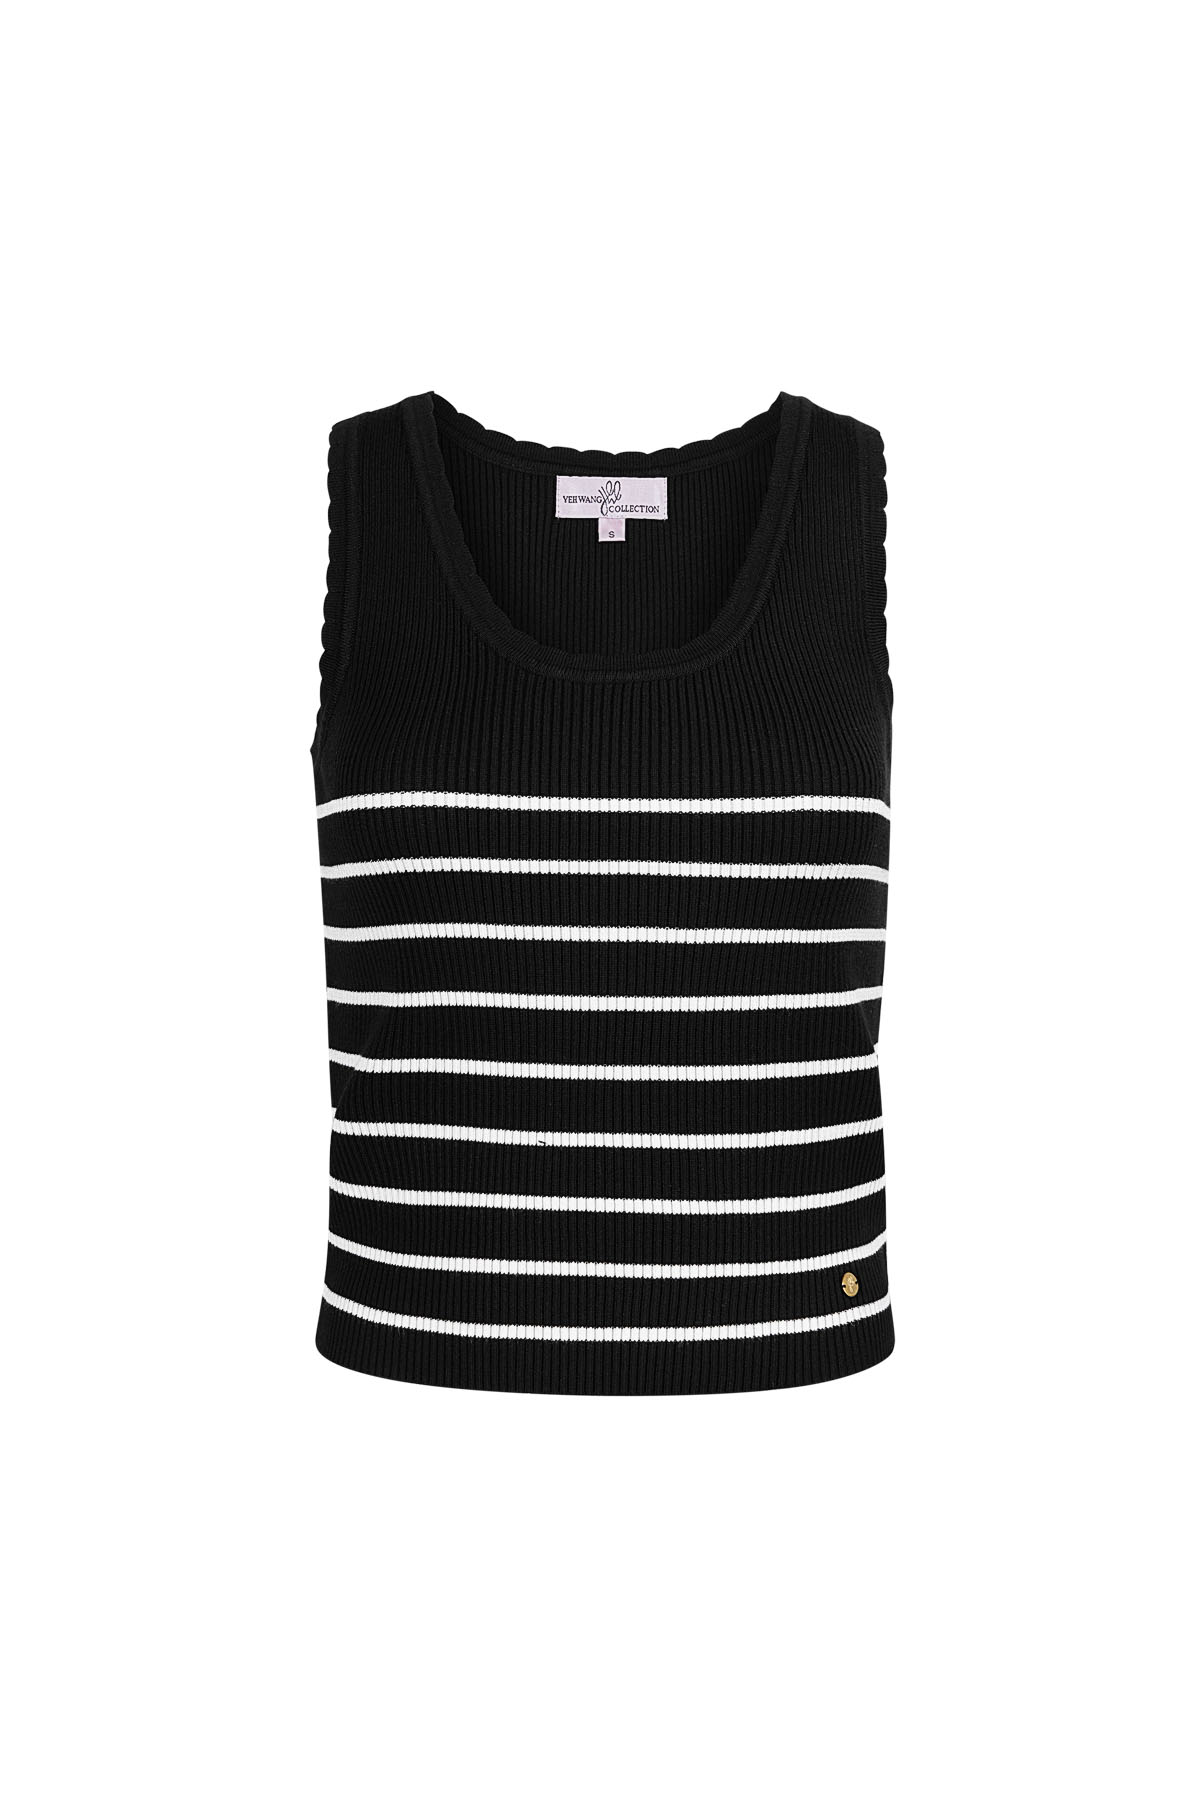 Striped, sleeveless top with classic edge medium – black